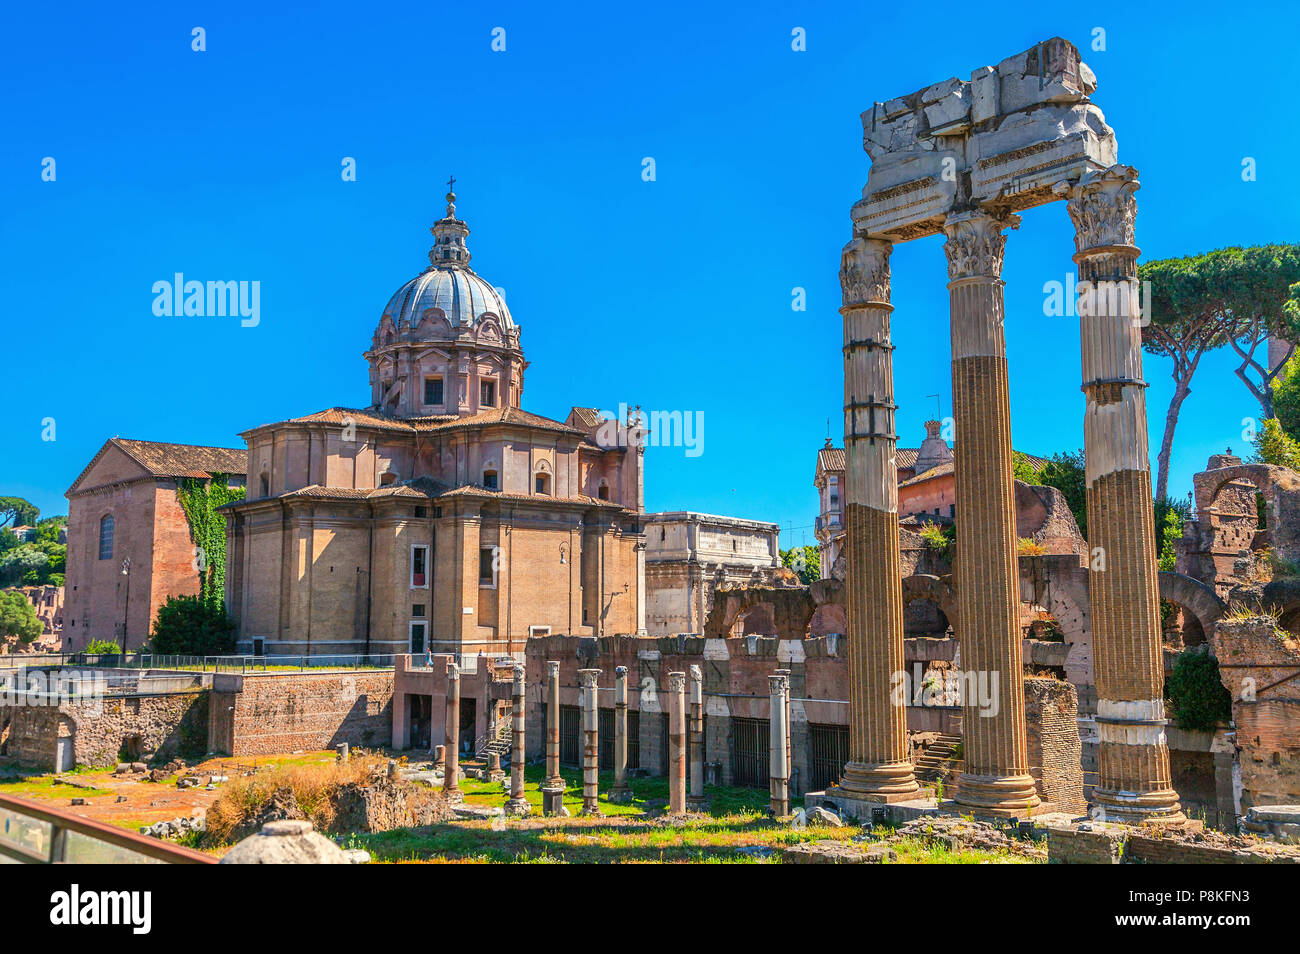 Ruins of ancient civilization. Roman forum. Stock Photo